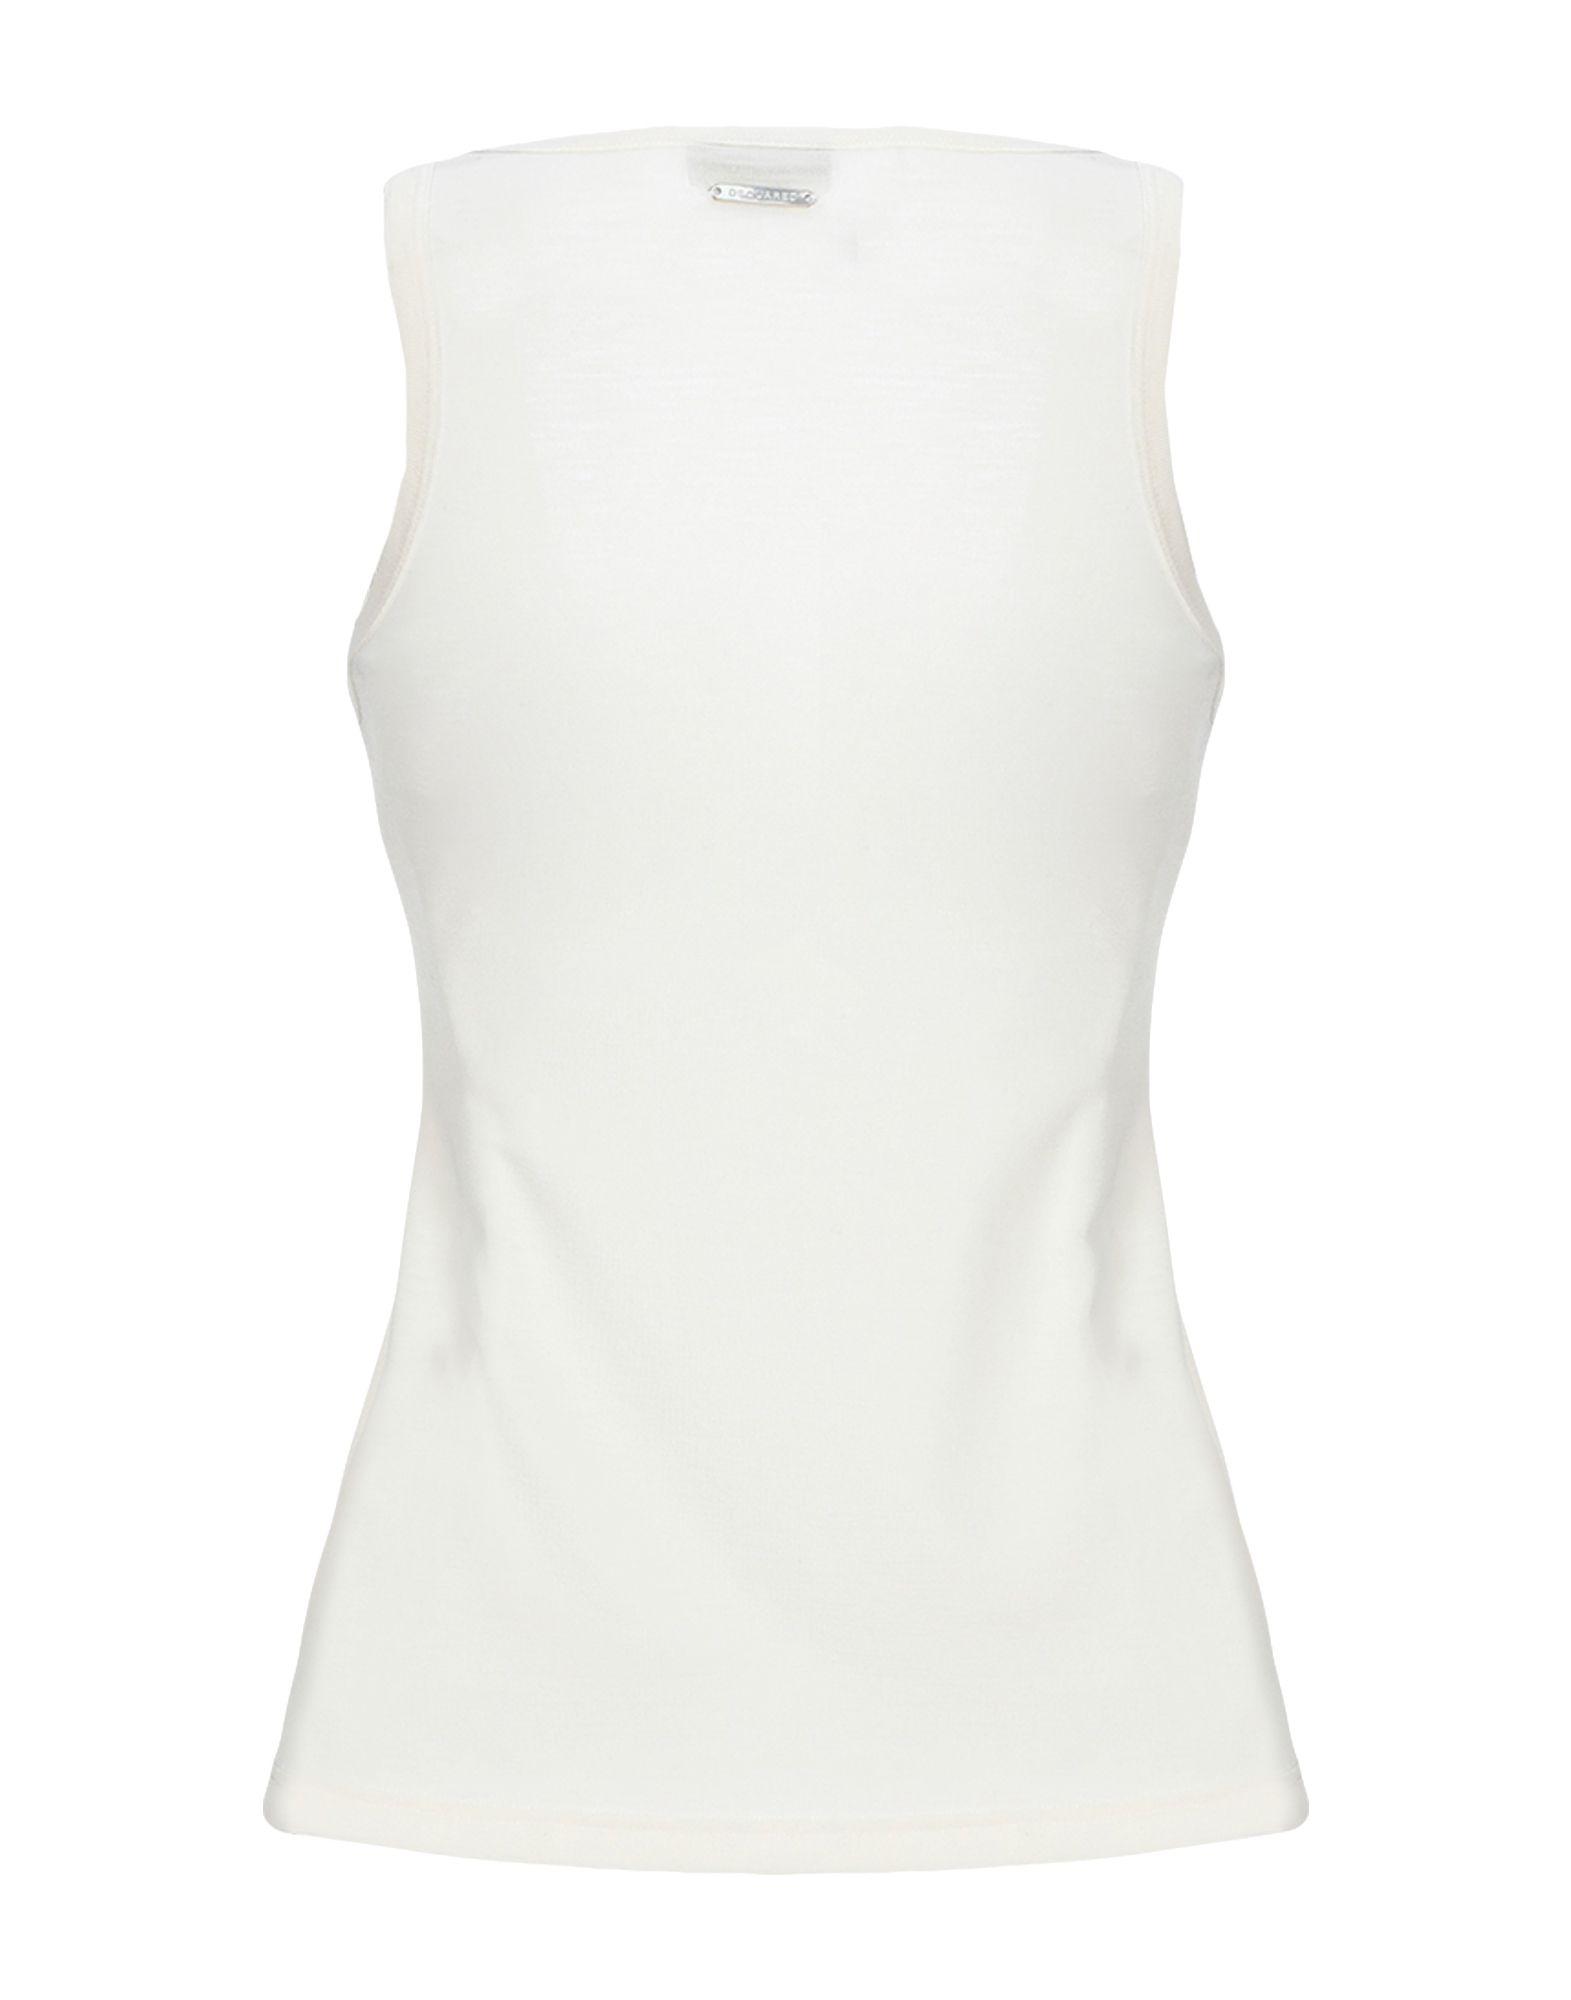 DSquared² Sleeveless Undershirt in Ivory (White) - Lyst